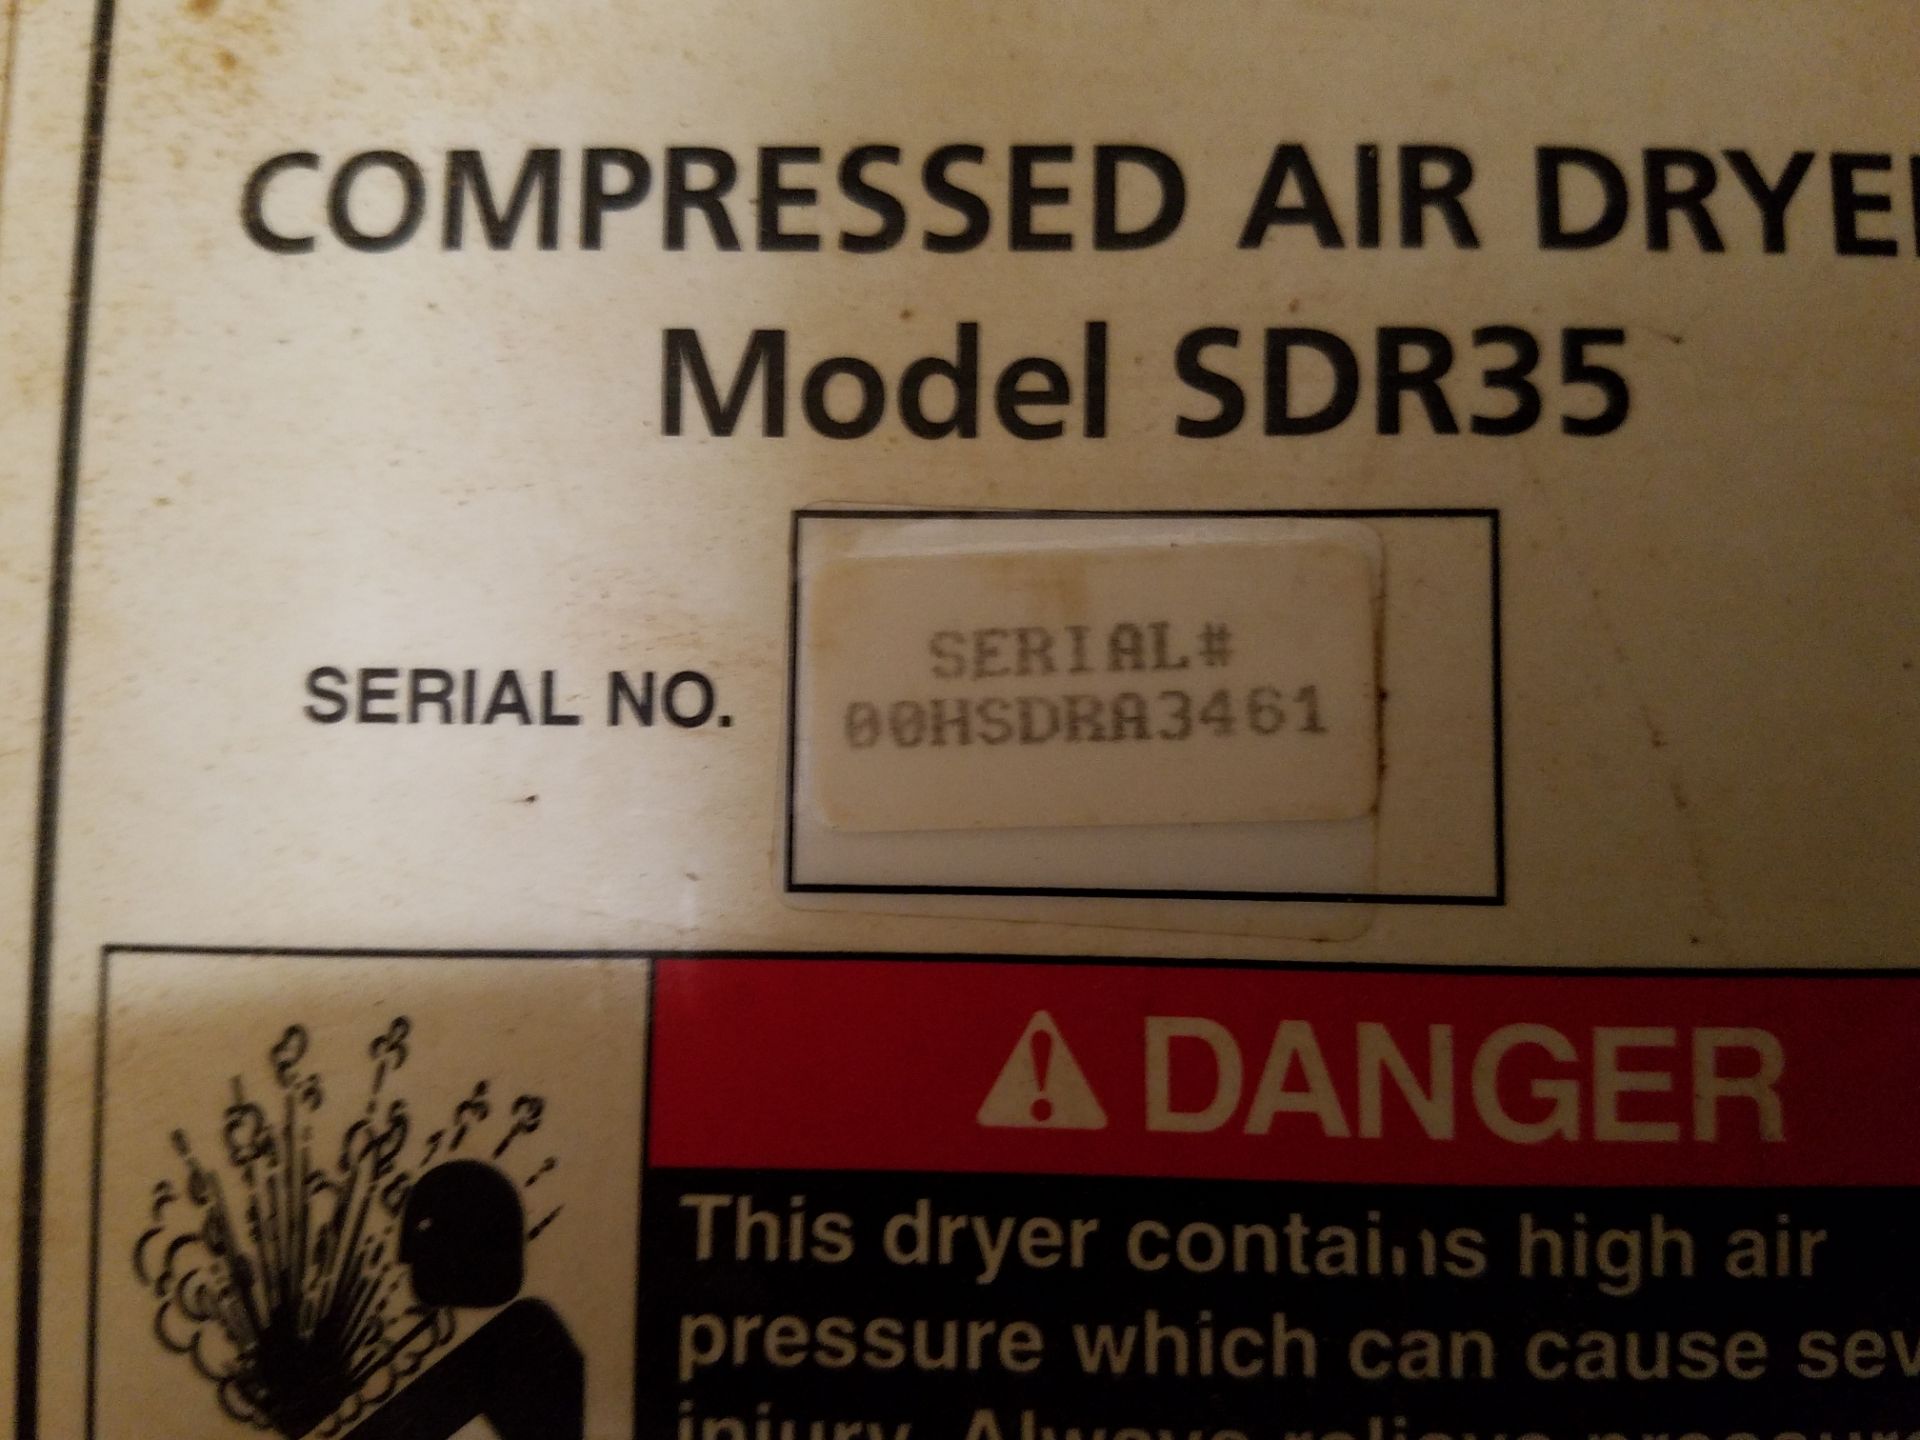 Ingersoll Rand Compressed Air Dryer, Model SD R 35, s/n 00HSDRA3416, $100 Loading Fee - Image 3 of 3